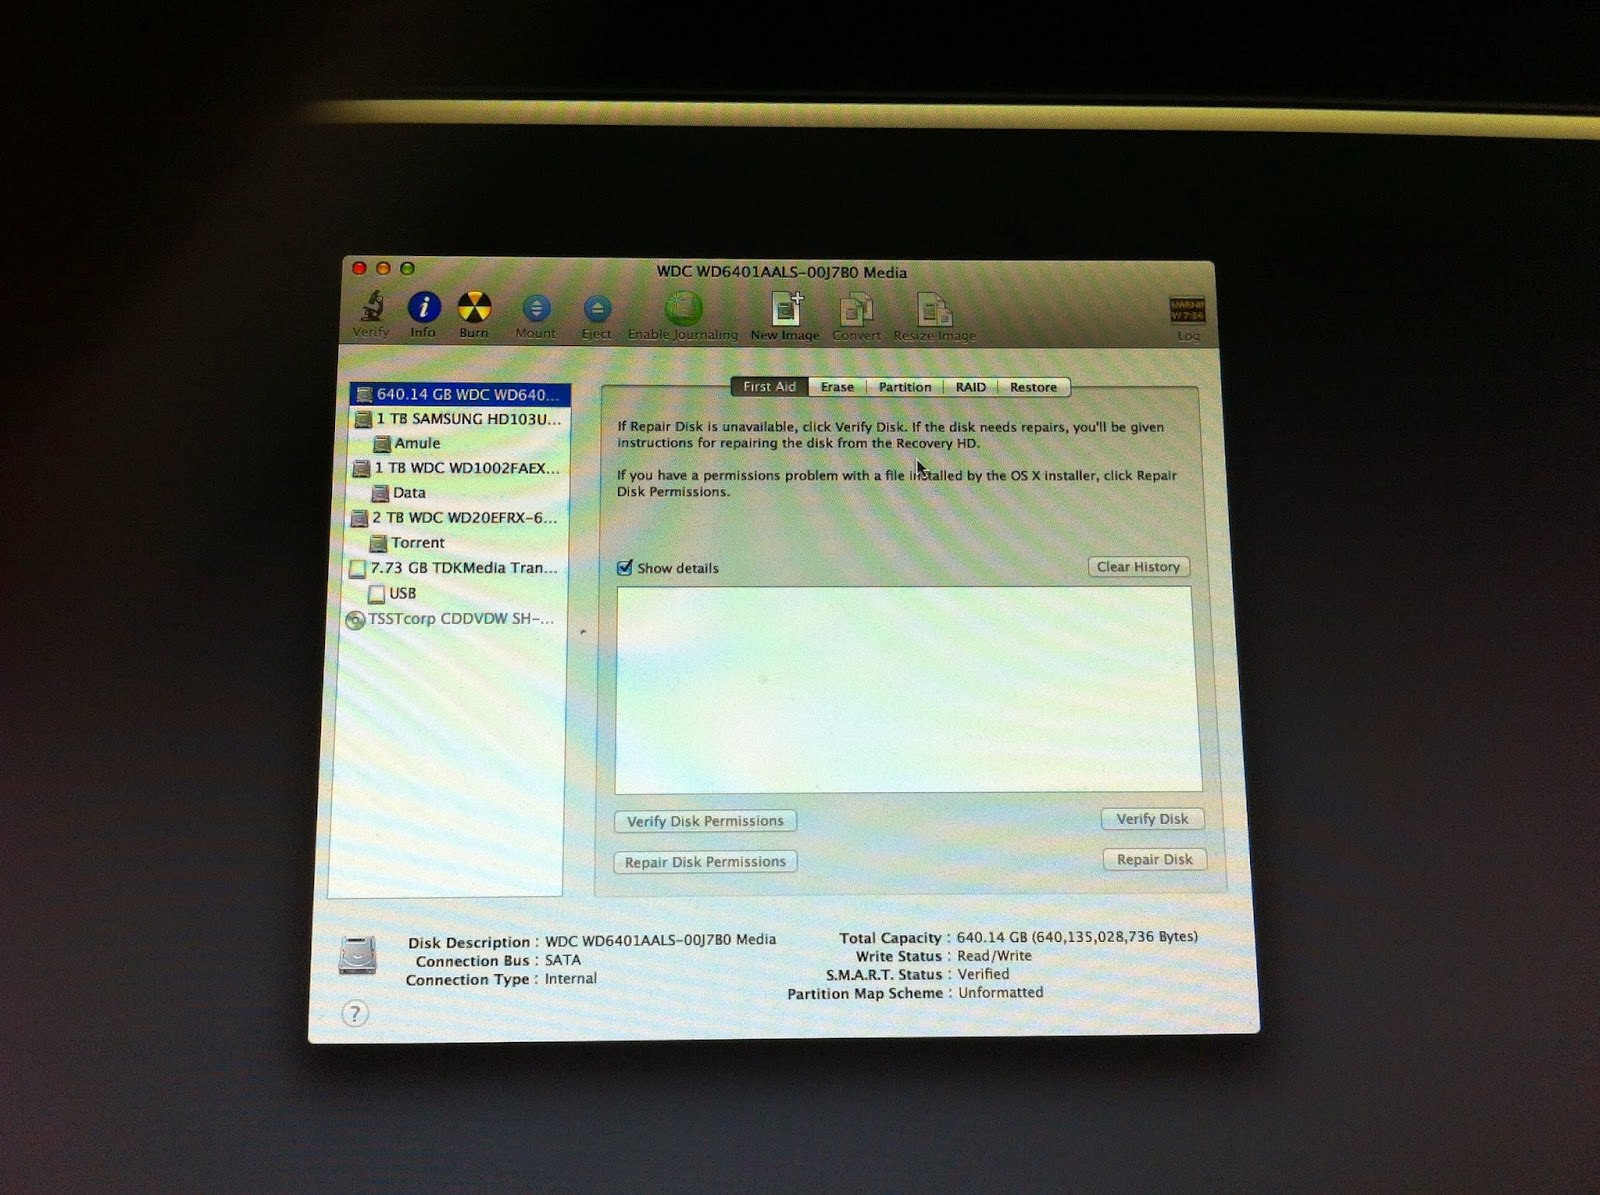 Mac Os X Mavericks 10.9 bootable installer - 10.9 [Intel]